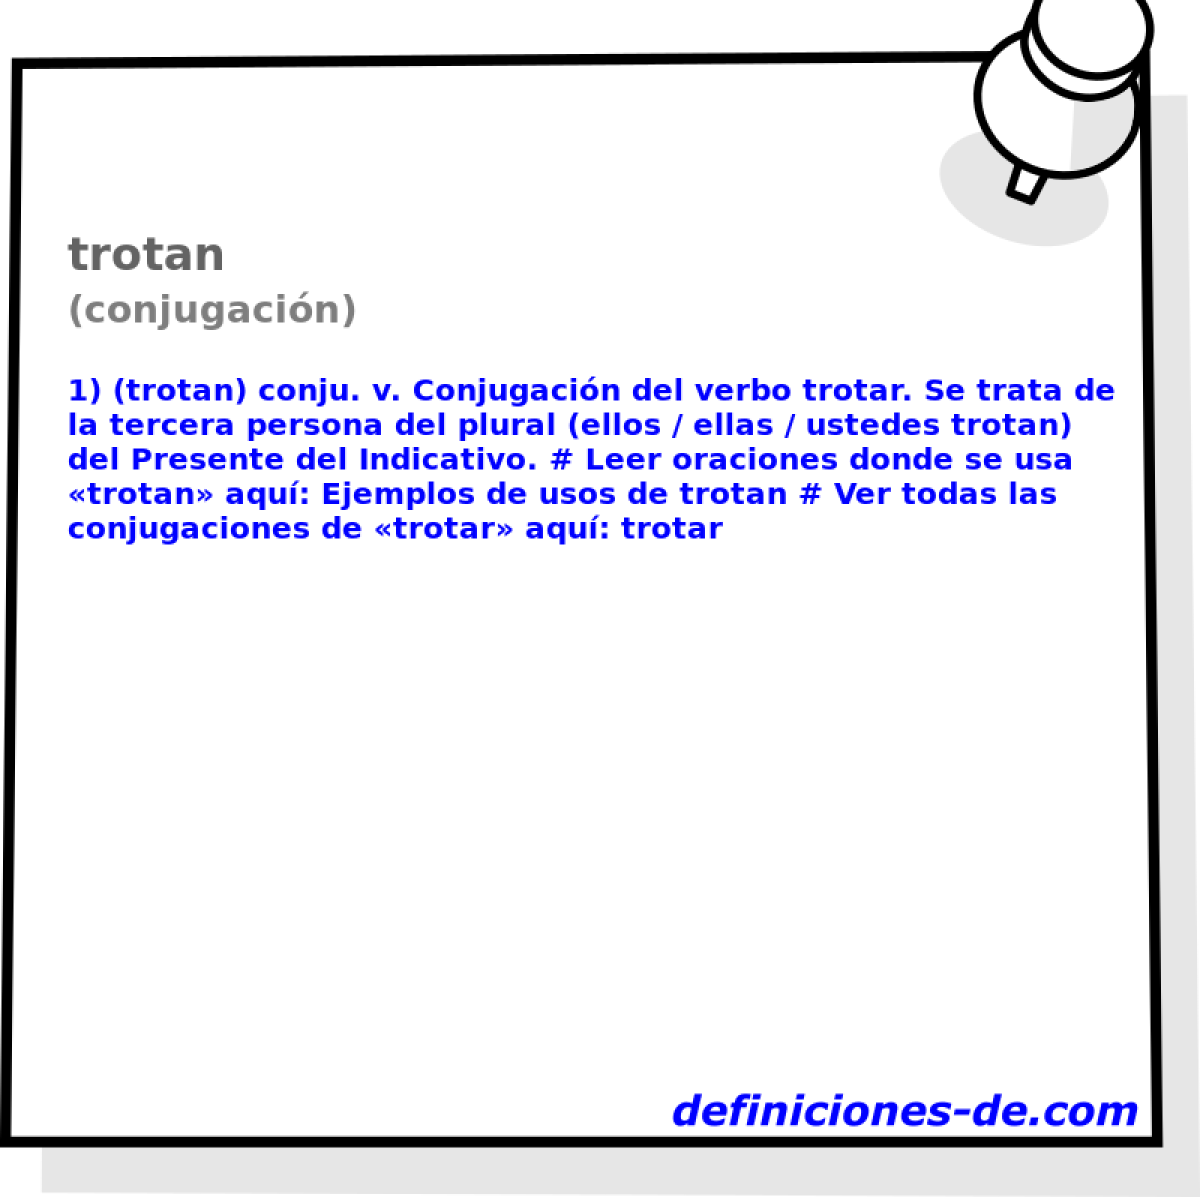 trotan (conjugacin)